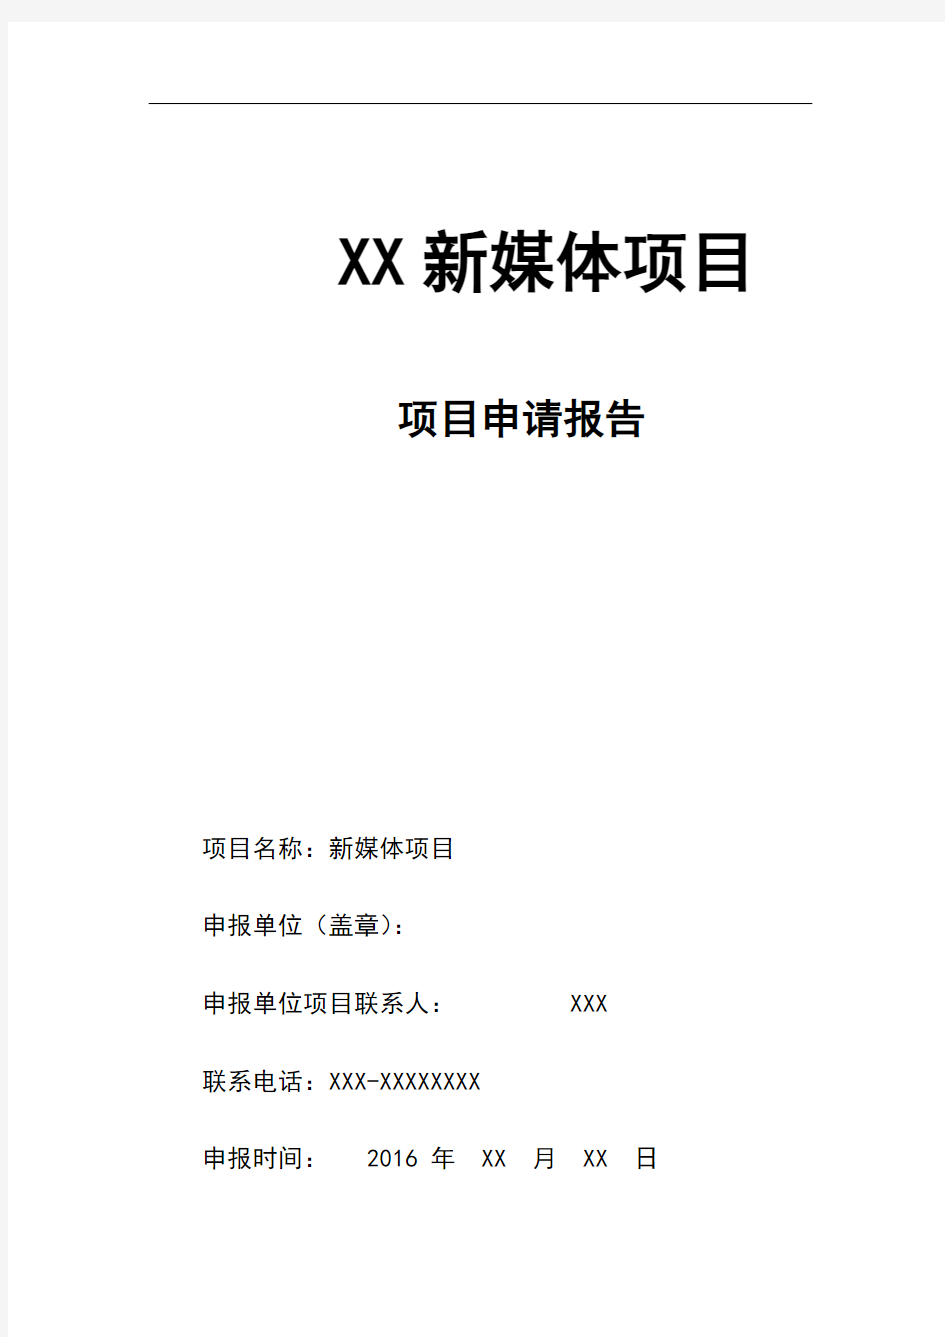 XX新媒体项目申请报告(精简版)V1R2